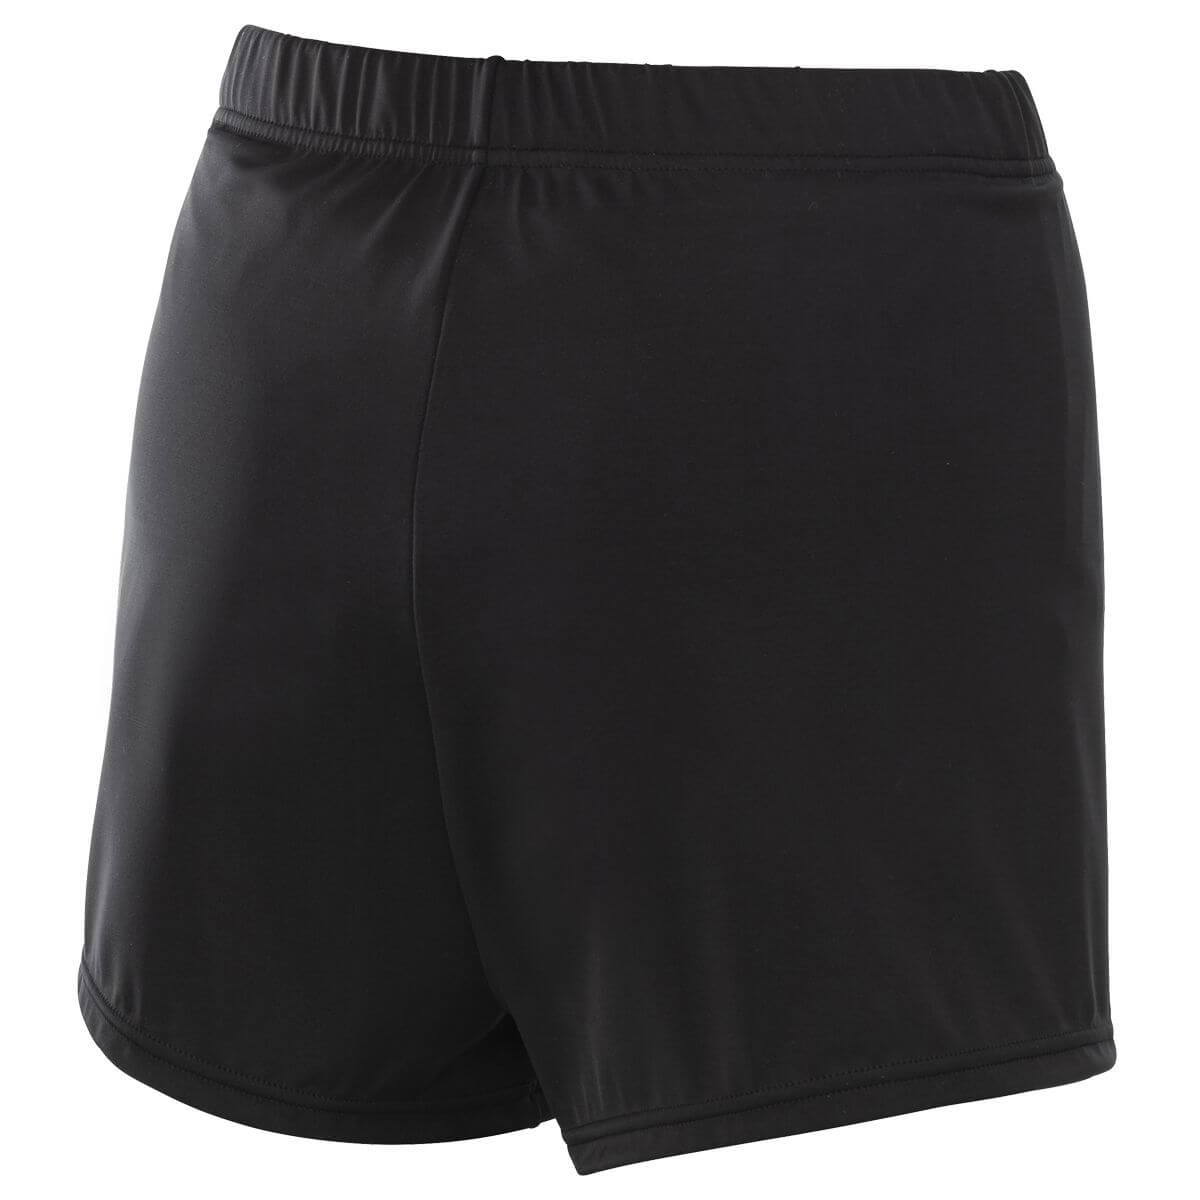 Ladies Tankini Incontinence Swim Shorts - Black - Size 20 | eBay